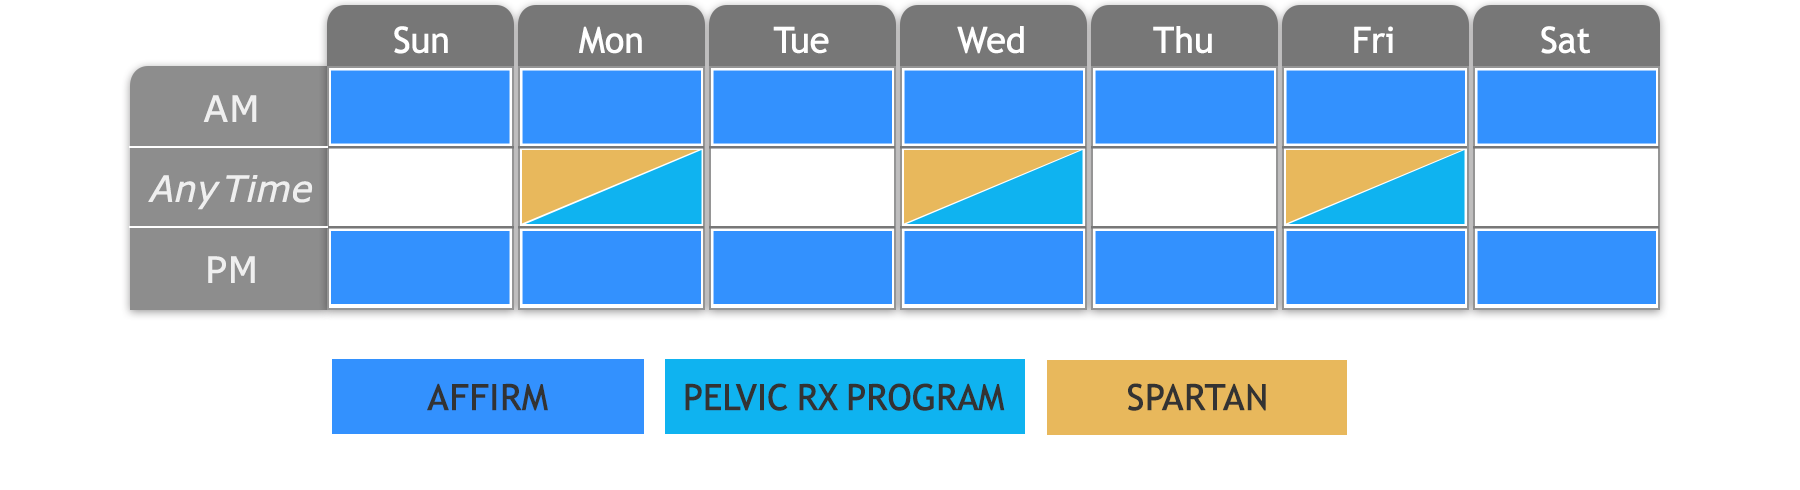 prostatectomy program weekly post-surgical routine calendar desktop